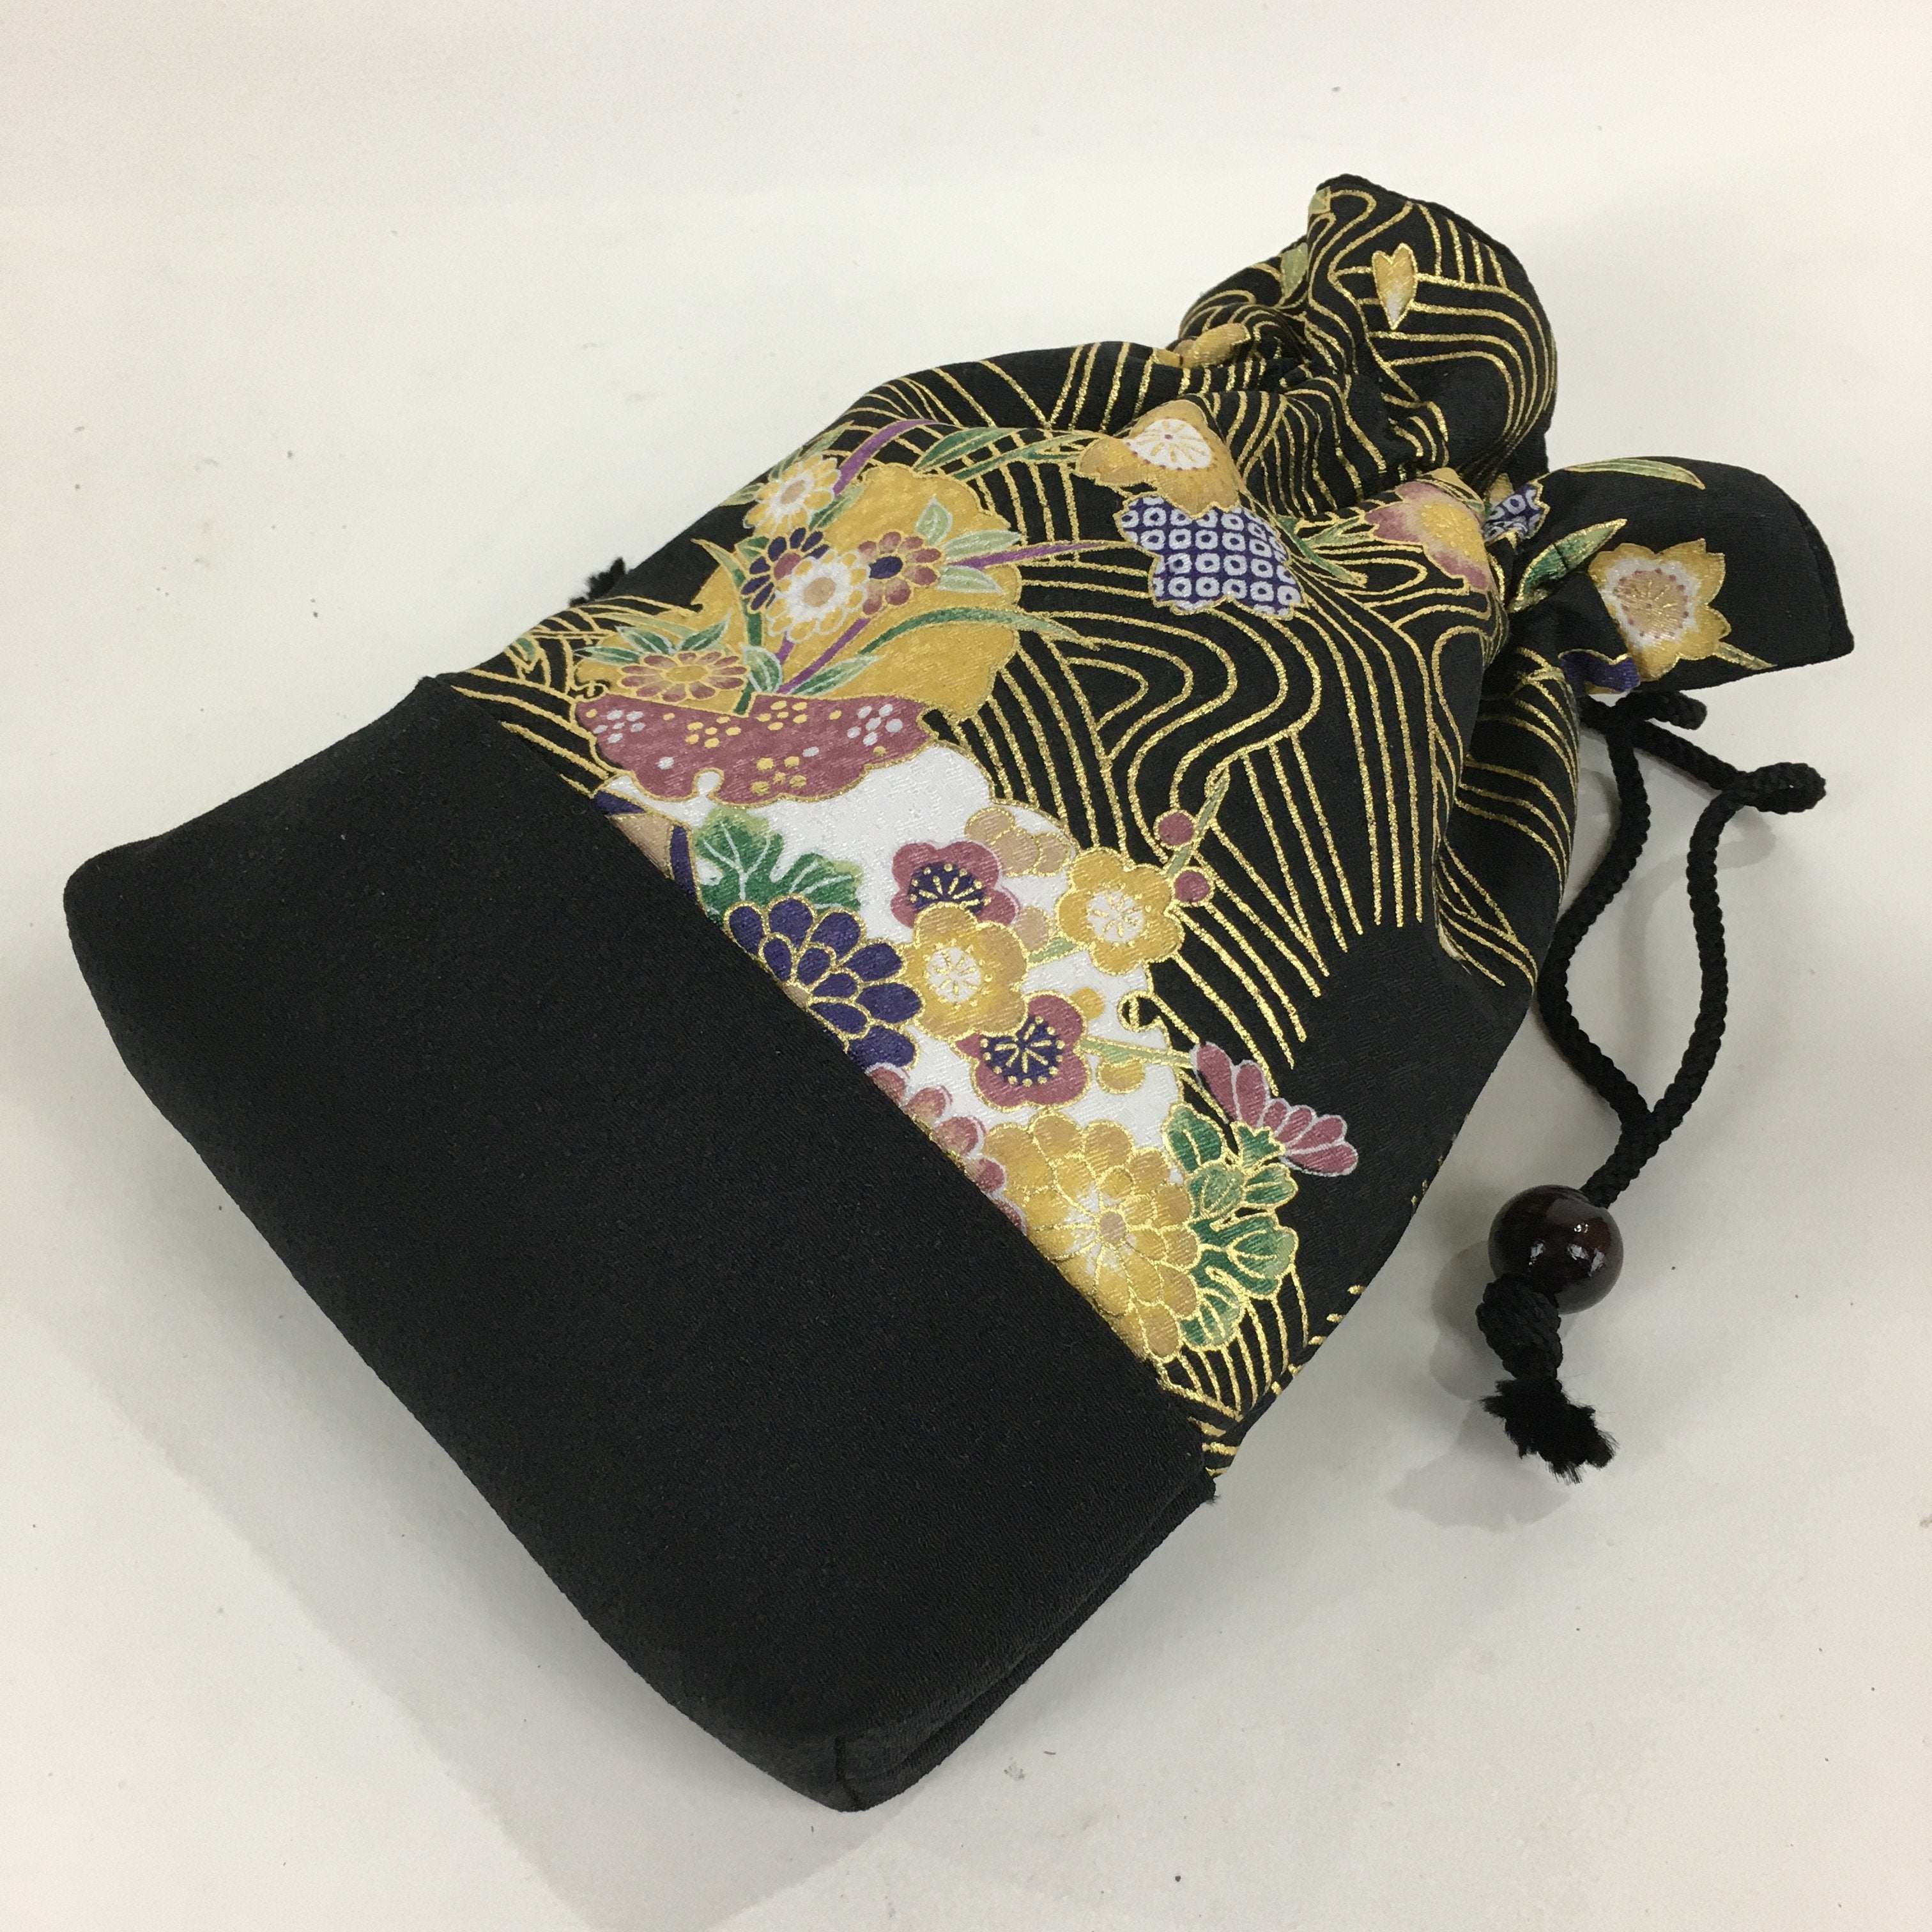 Japanese Cloth Drawstring Bag Vtg Kimono Fabric Pouch Black Kinchaku-Bukuro KB22